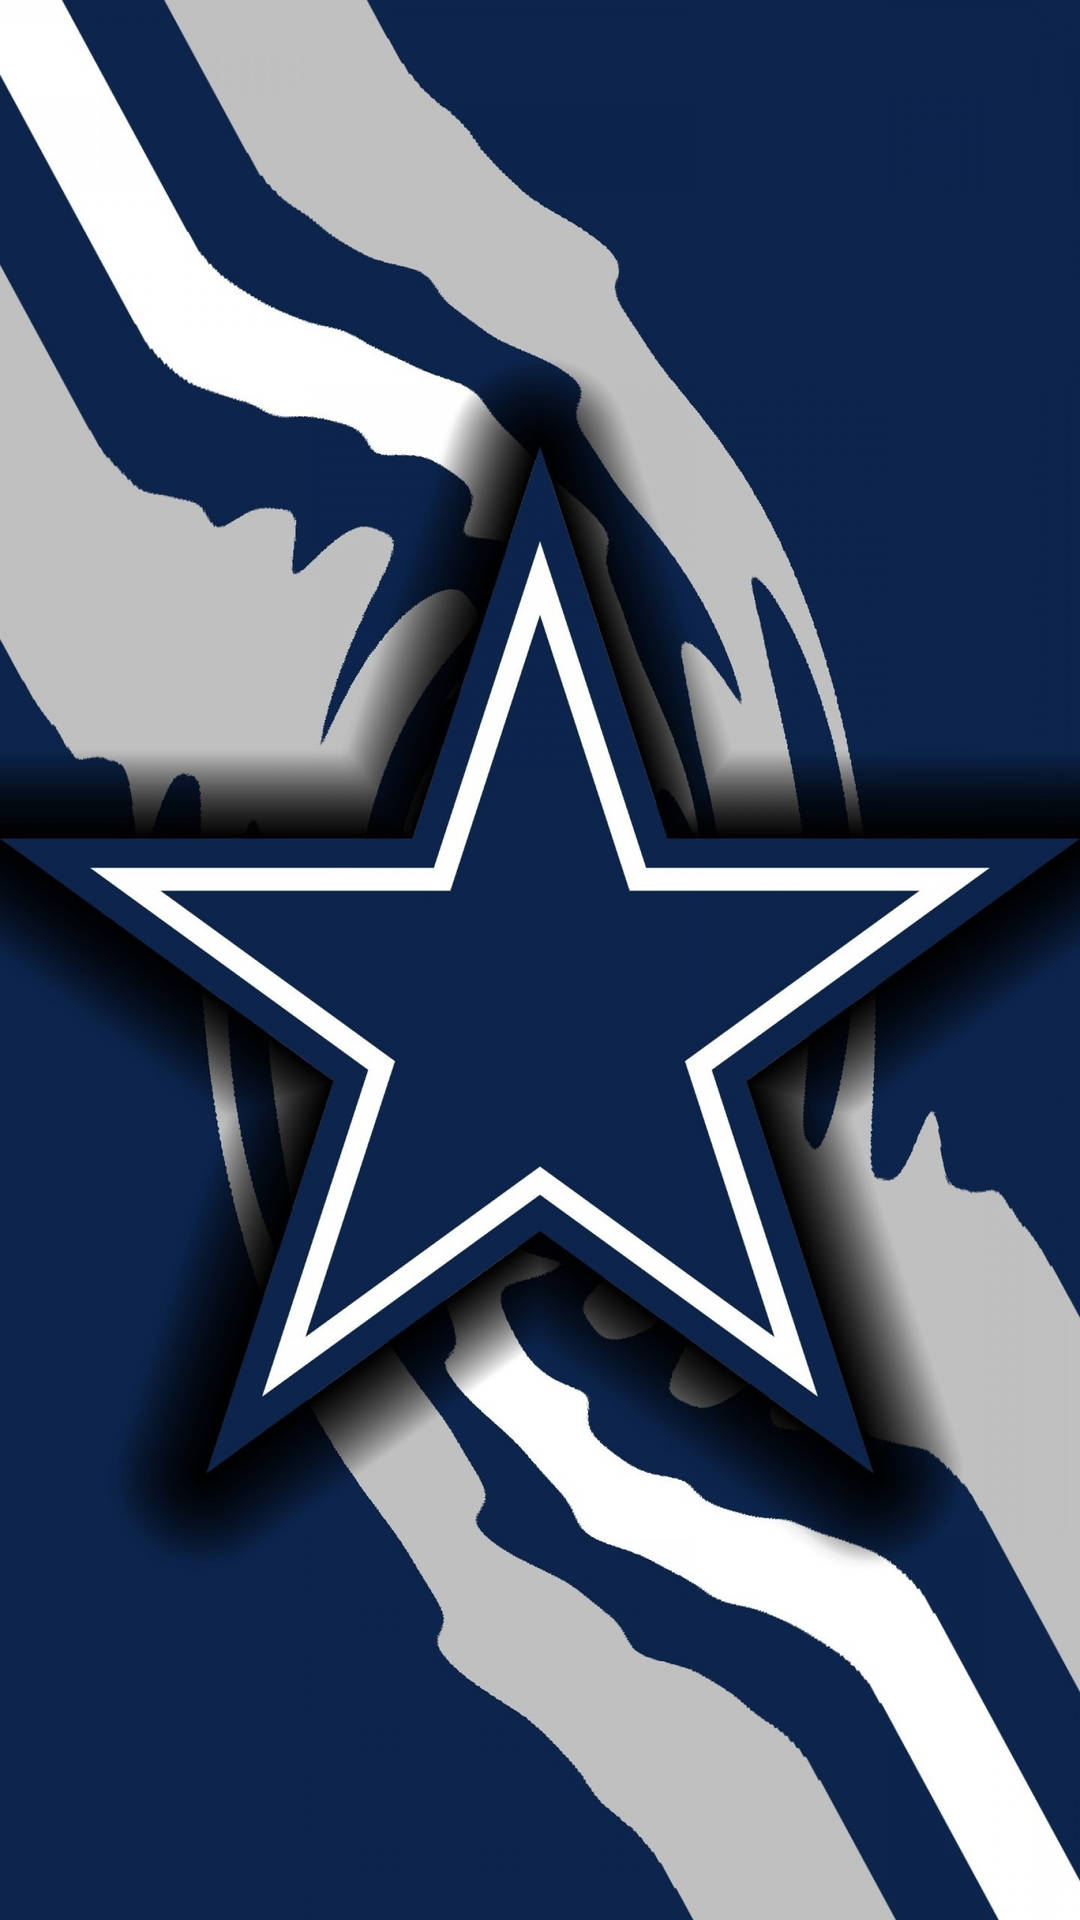 Dallas Cowboys Logo With Swirls For Phone